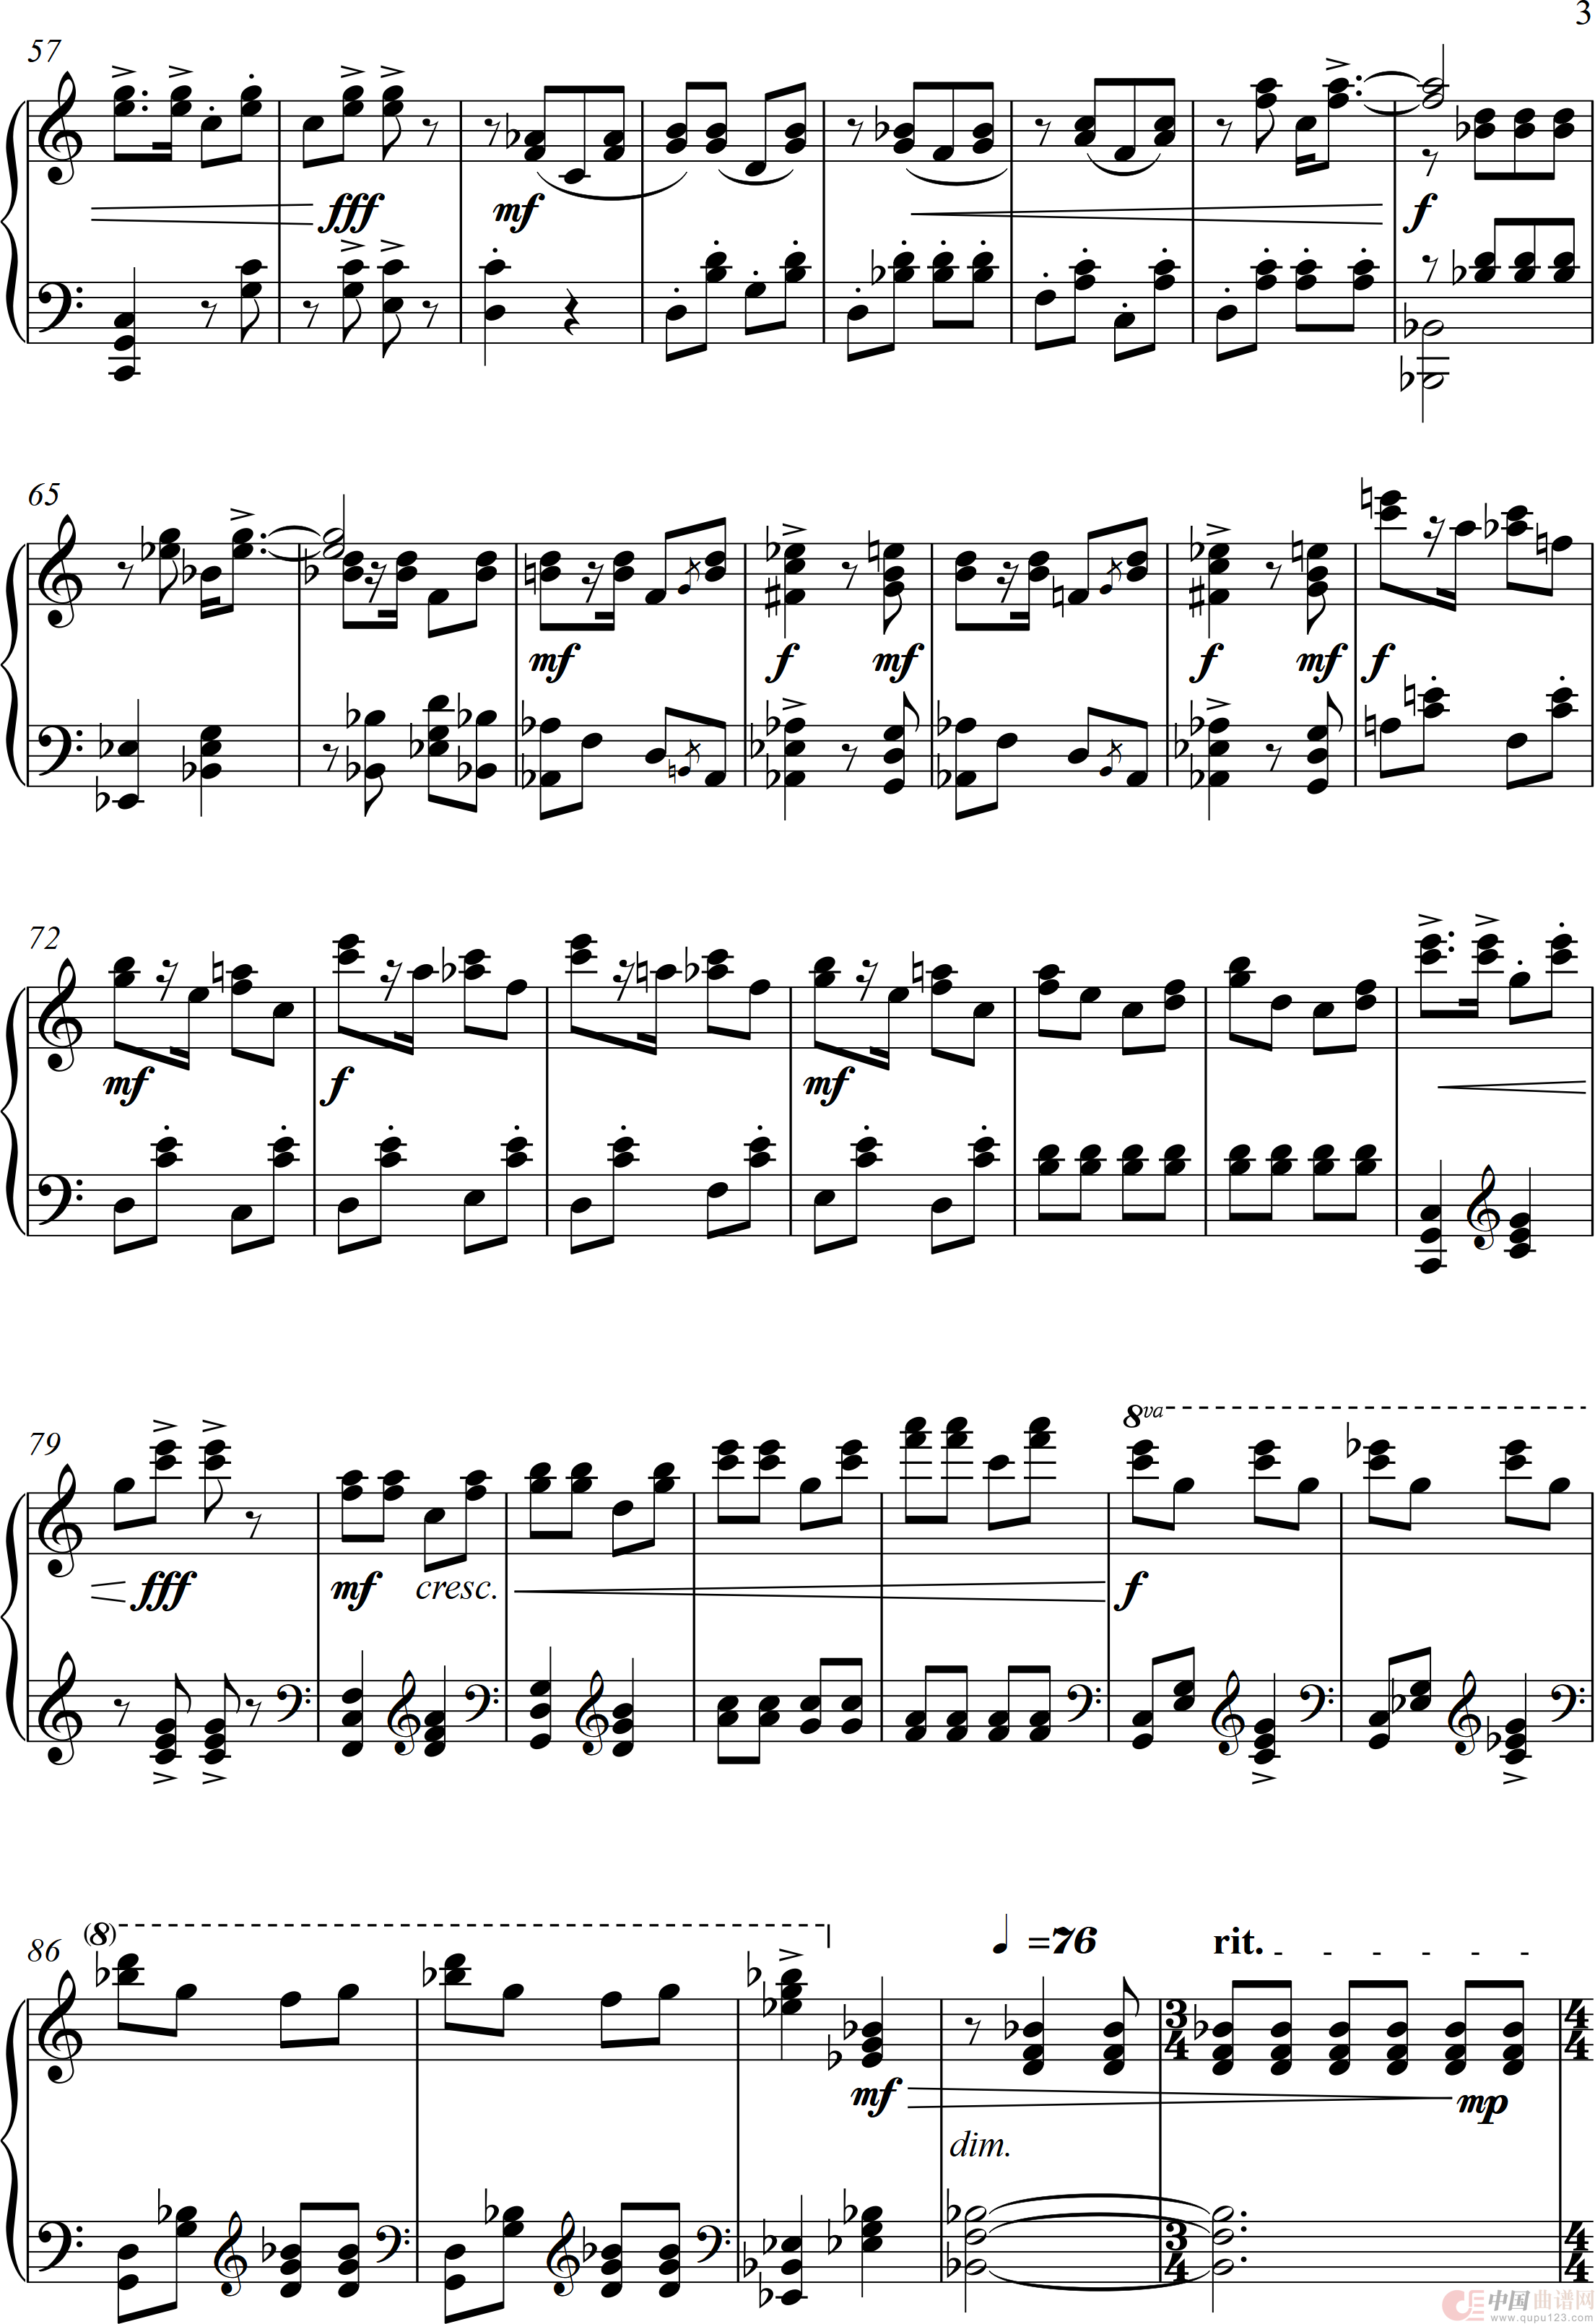 《“山歌主题与变奏”“Folk Pctema and Variationns”》钢琴曲谱图分享